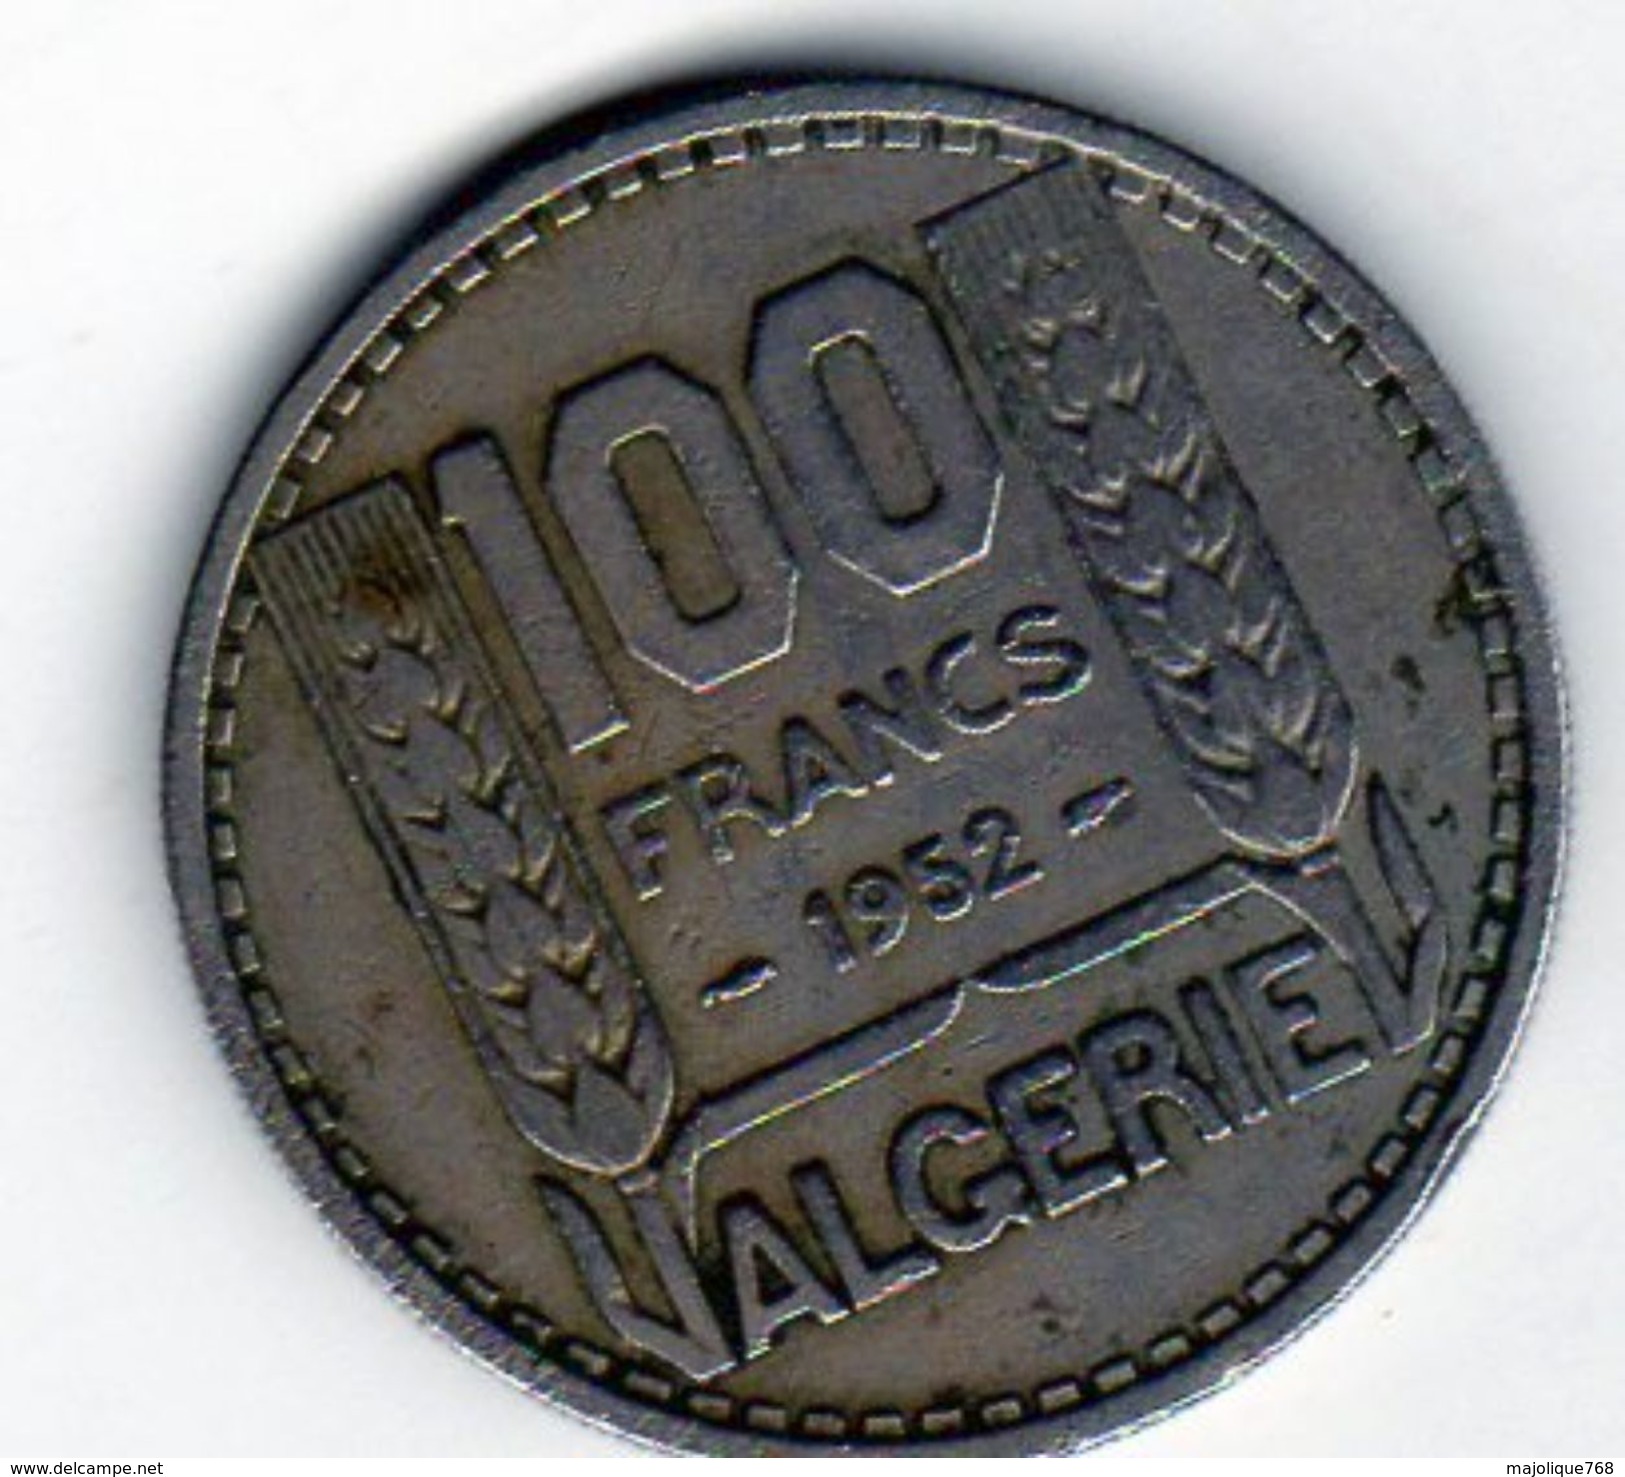 Pièce De Monnaie De L'Algérie De 100 Francs En Cupro-nickel 1952 En T T B - - Algeria